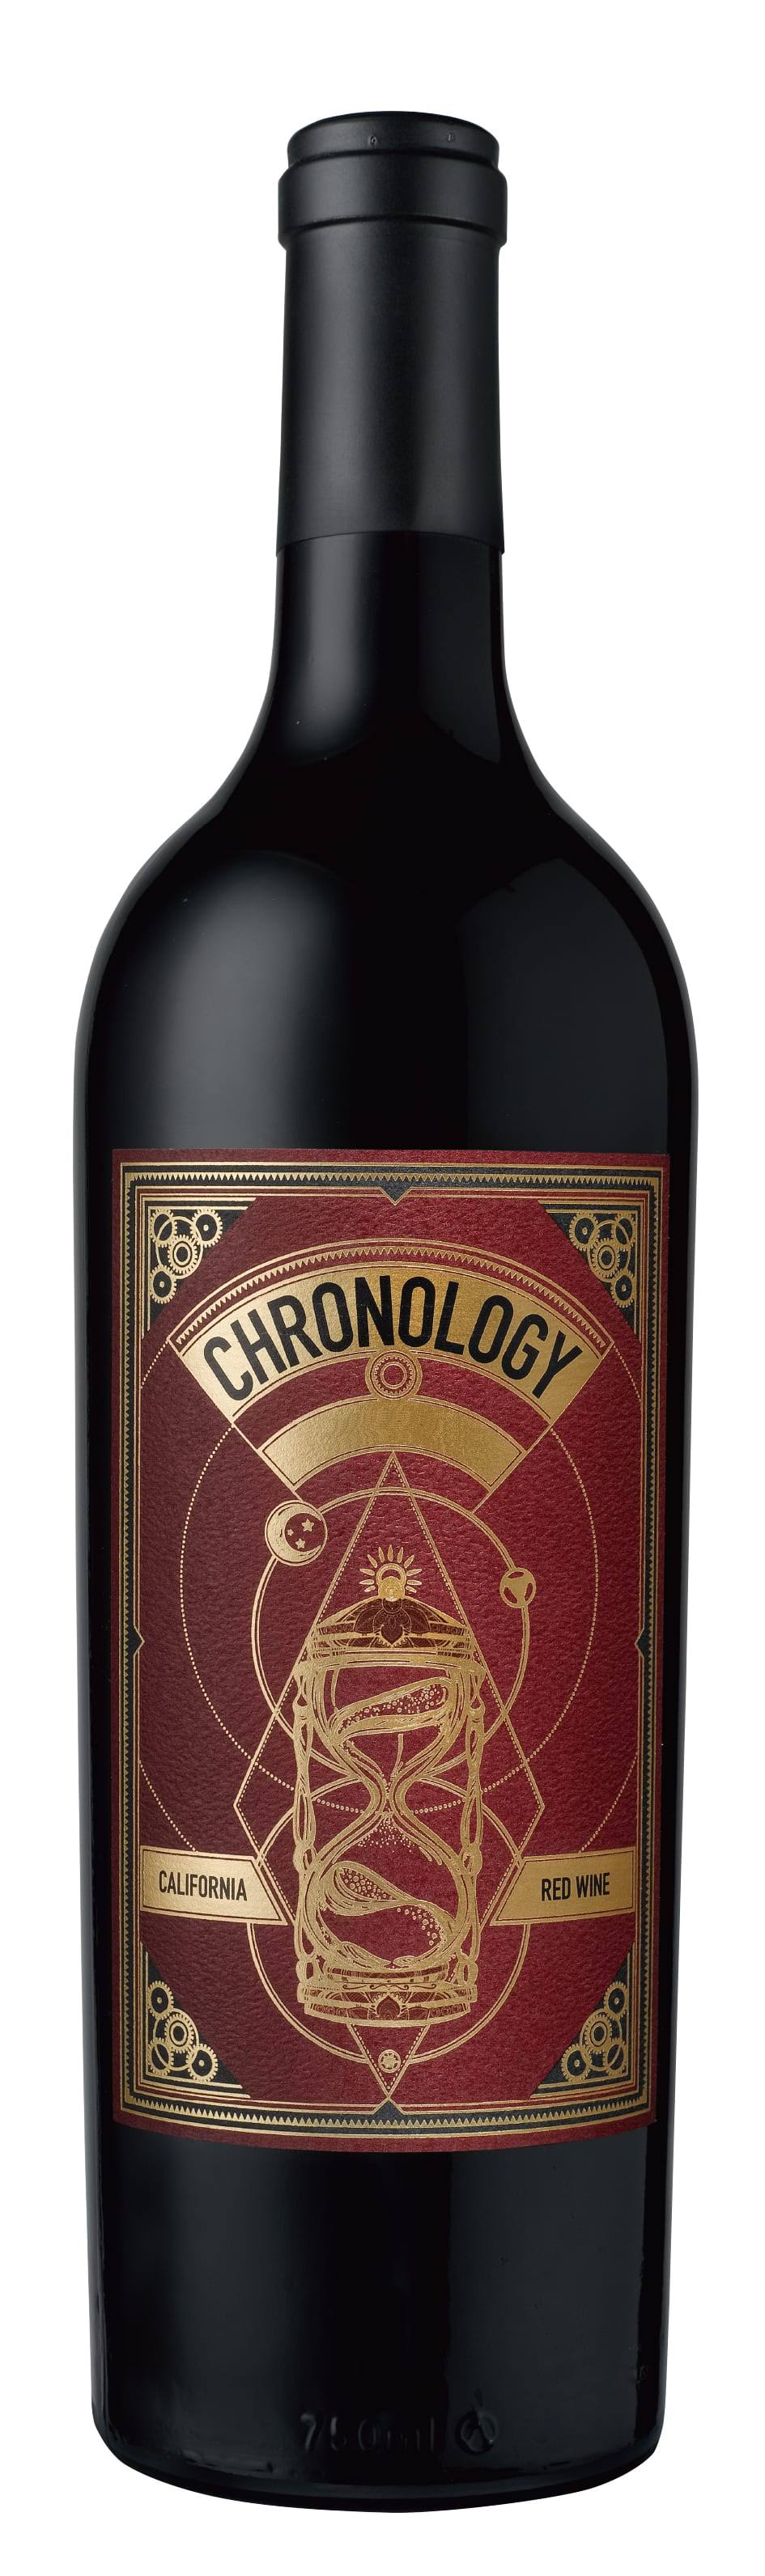 Chronology Red Wine, California, Vintage 2016 - 750 ml